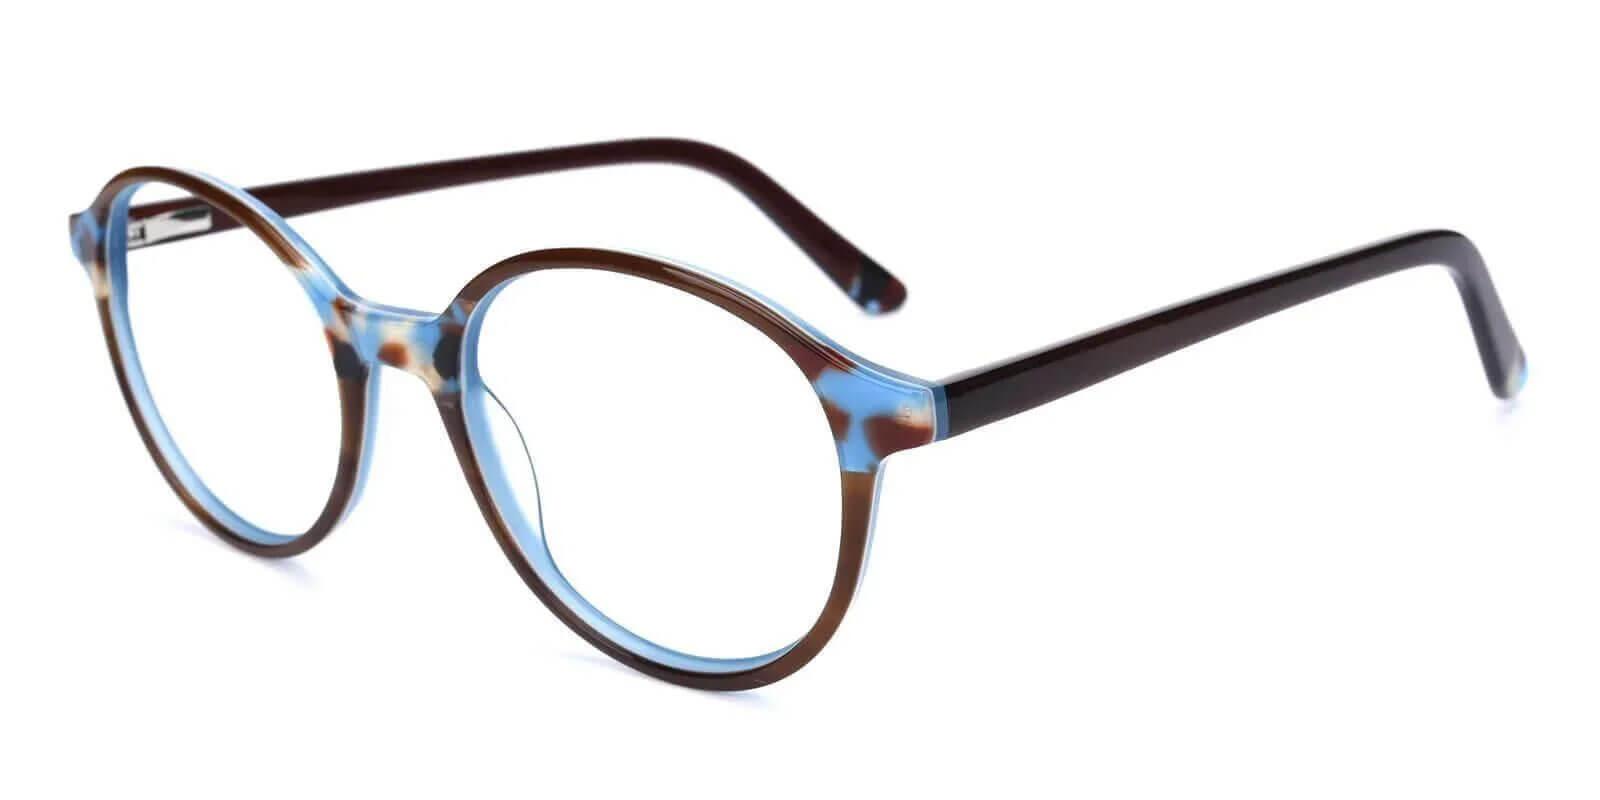 Vienna Blue Acetate Eyeglasses , UniversalBridgeFit Frames from ABBE Glasses